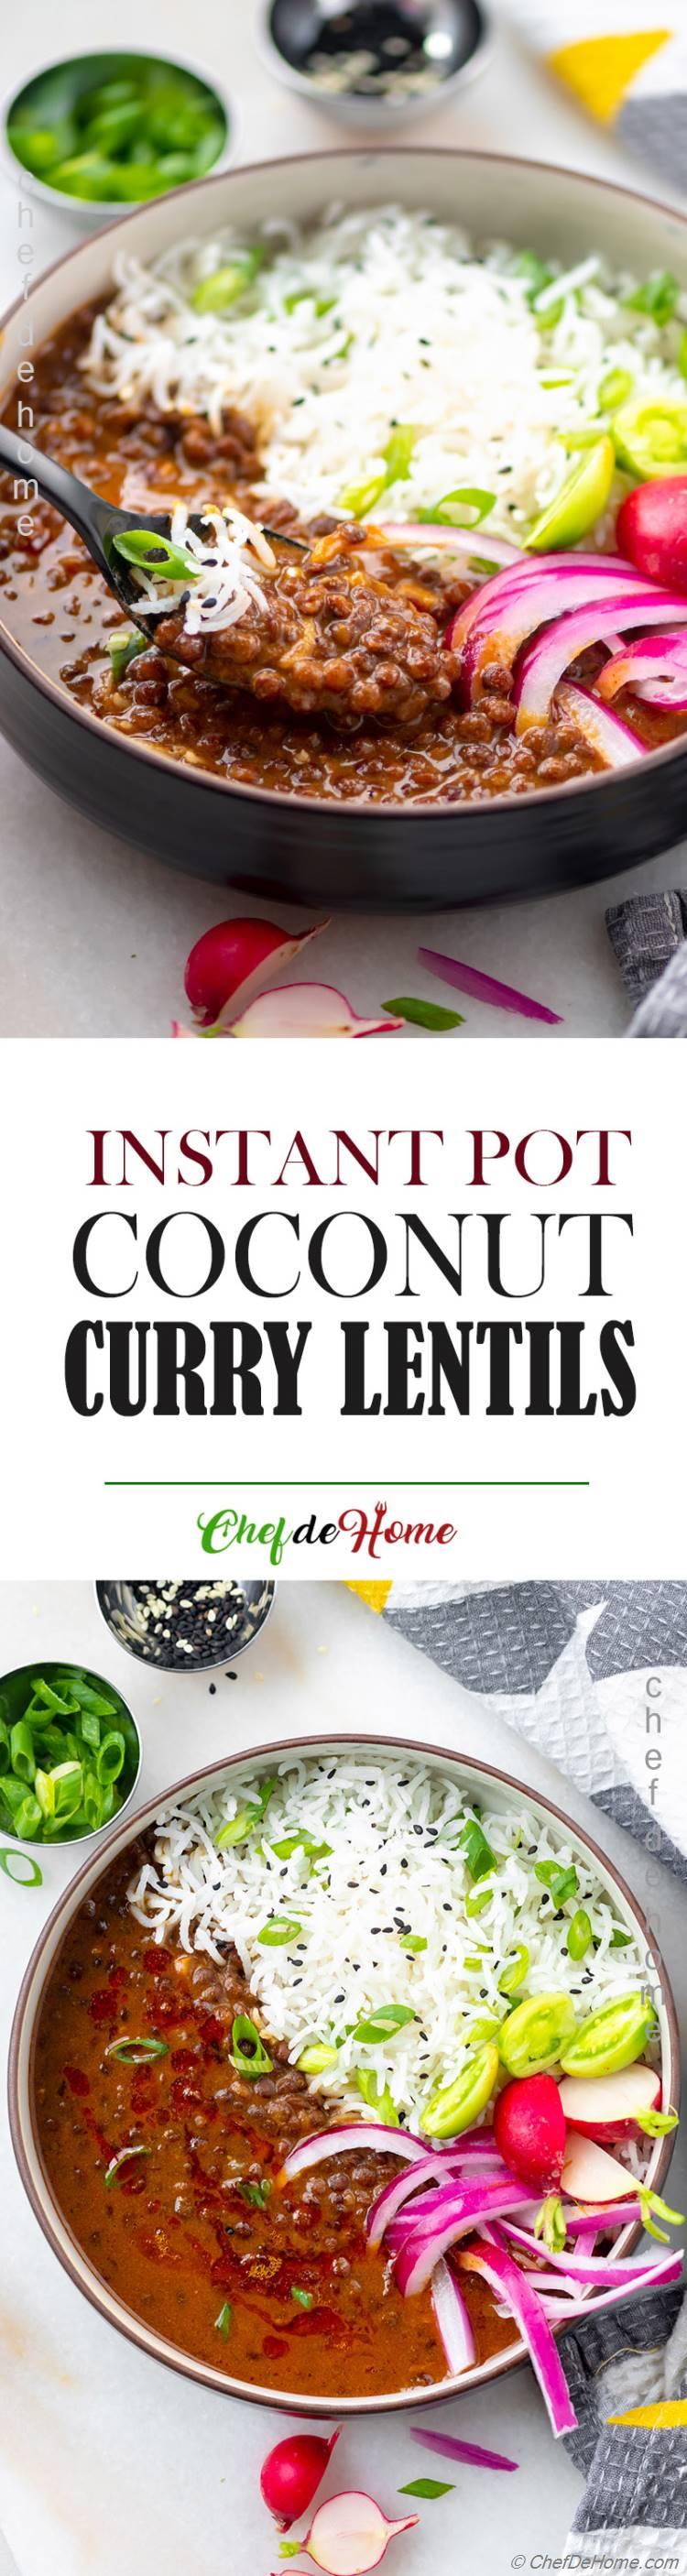 The Best Spicy Instant Pot Lentils Recipe - Long Picture